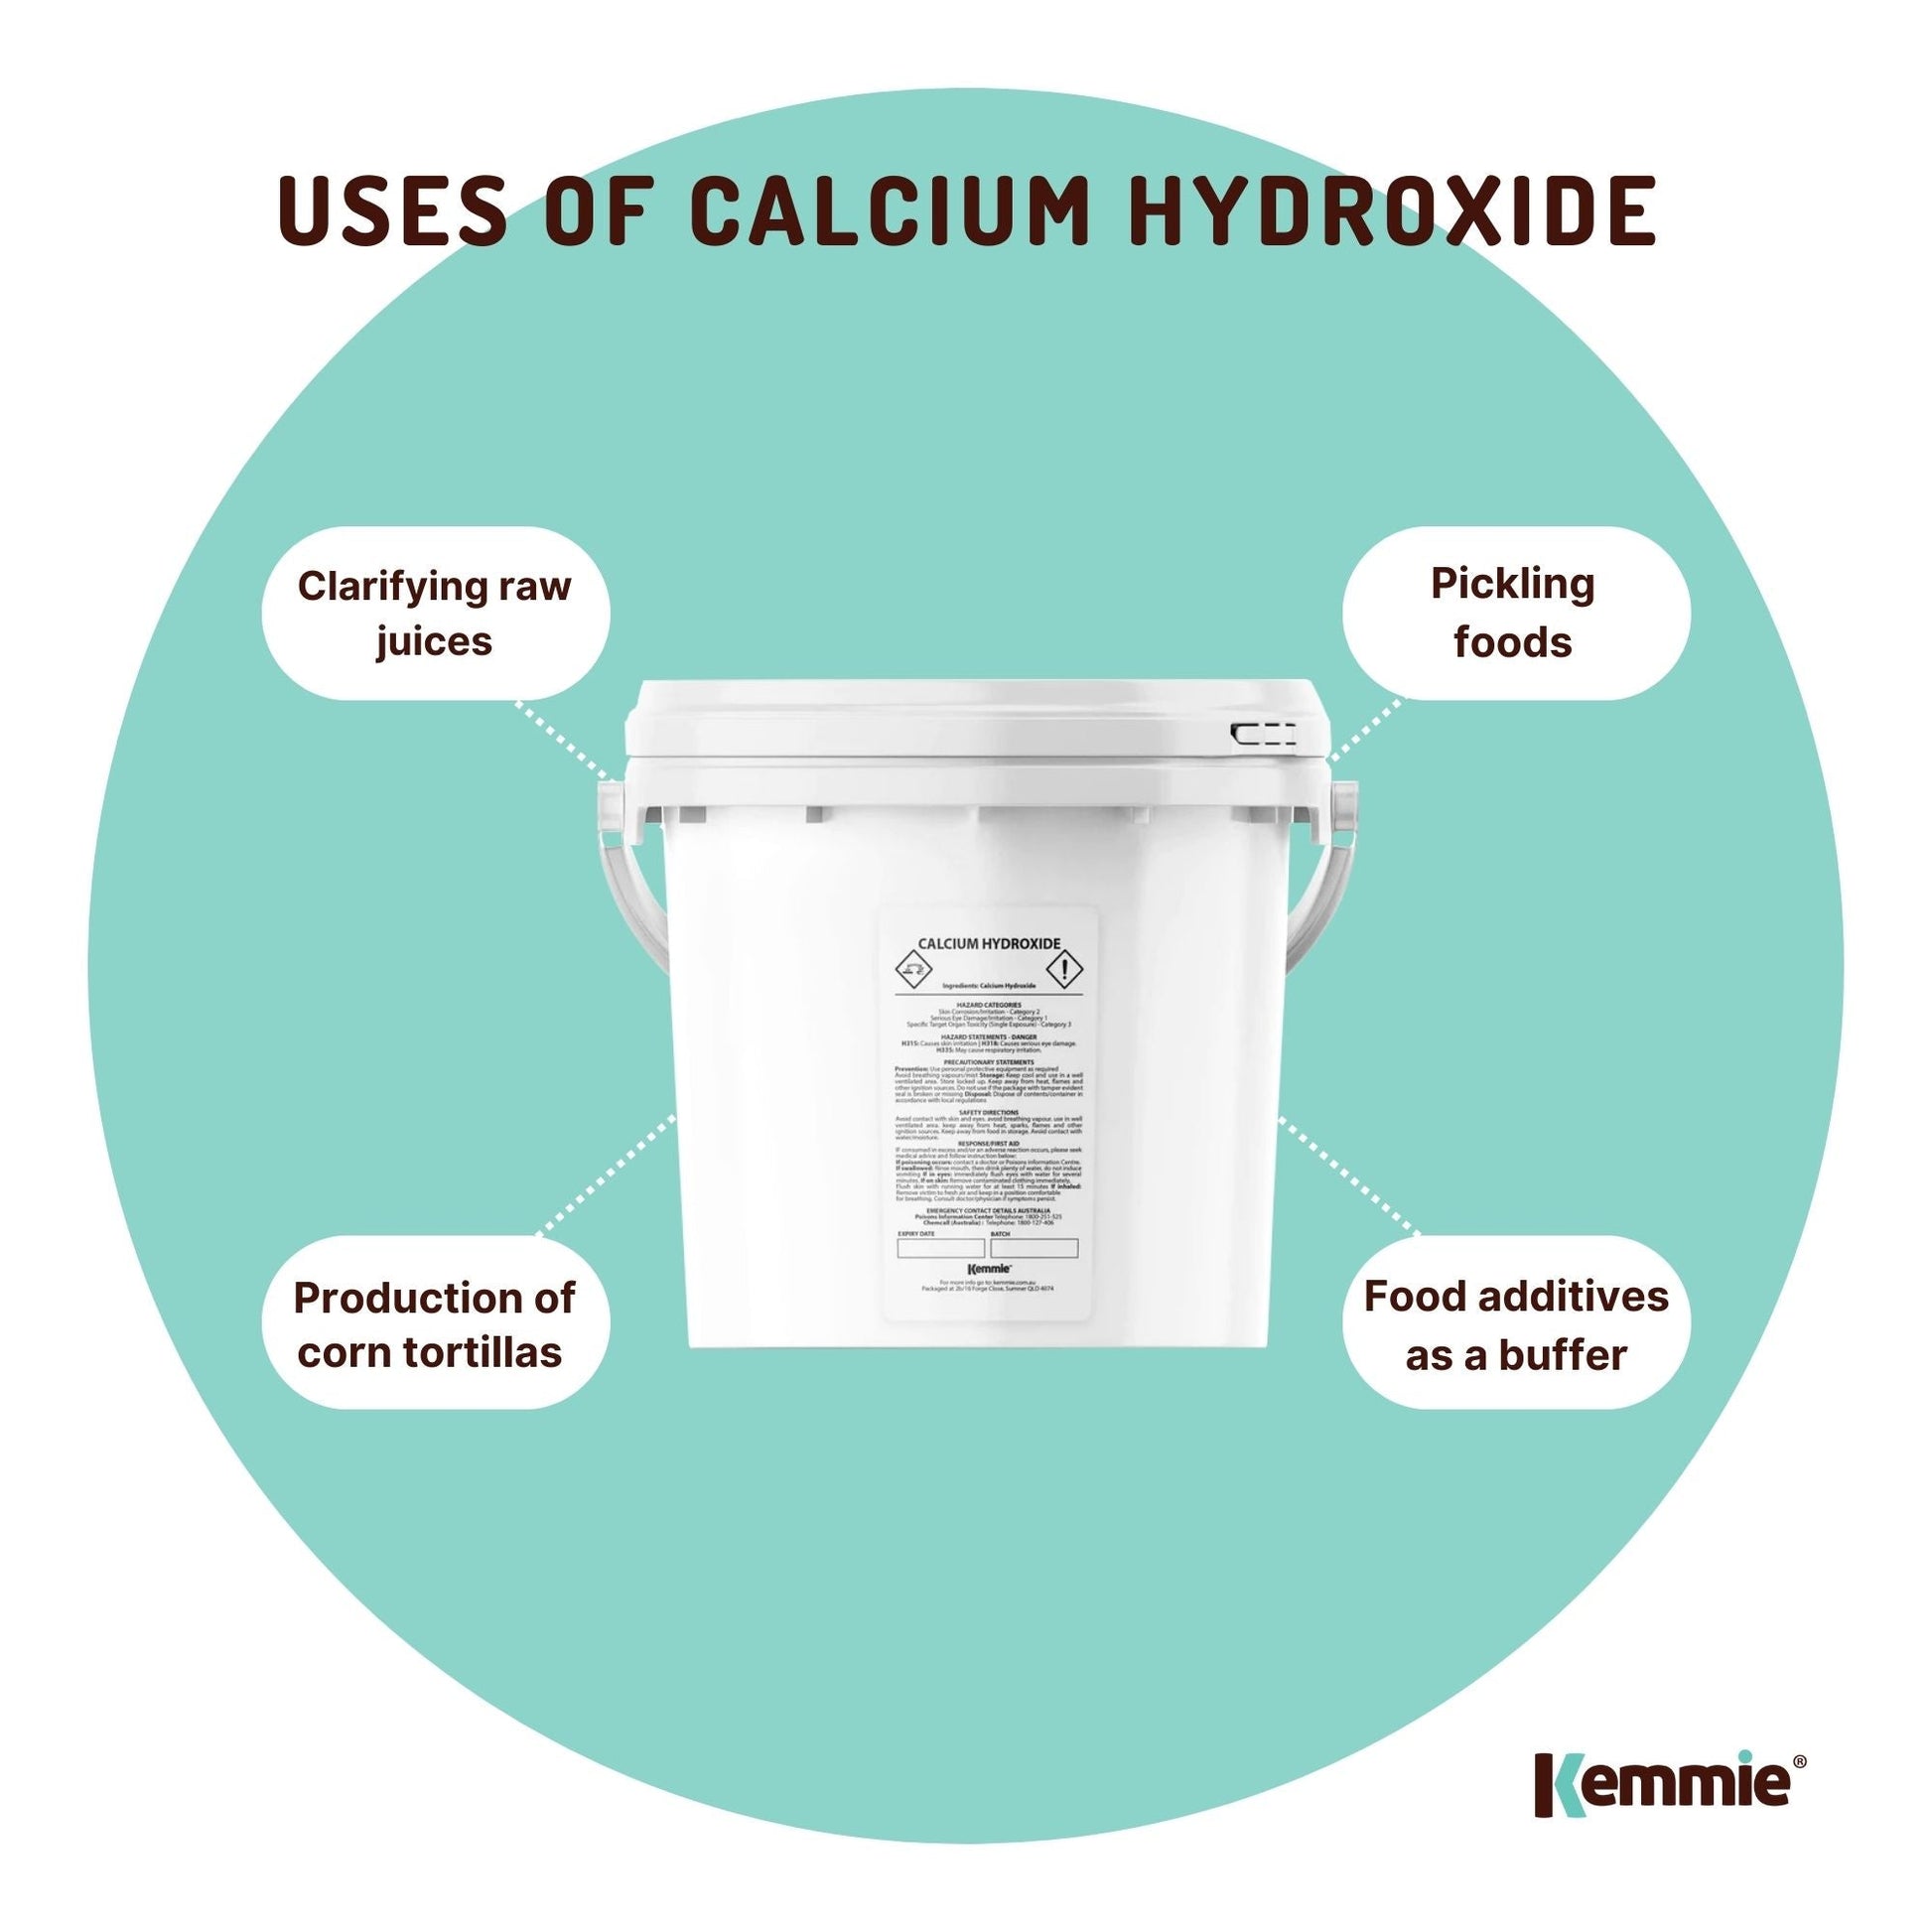 2.5kg Calcium Hydroxide Powder Tub Food Grade FCC Hydrated Slaked Pickling Lime